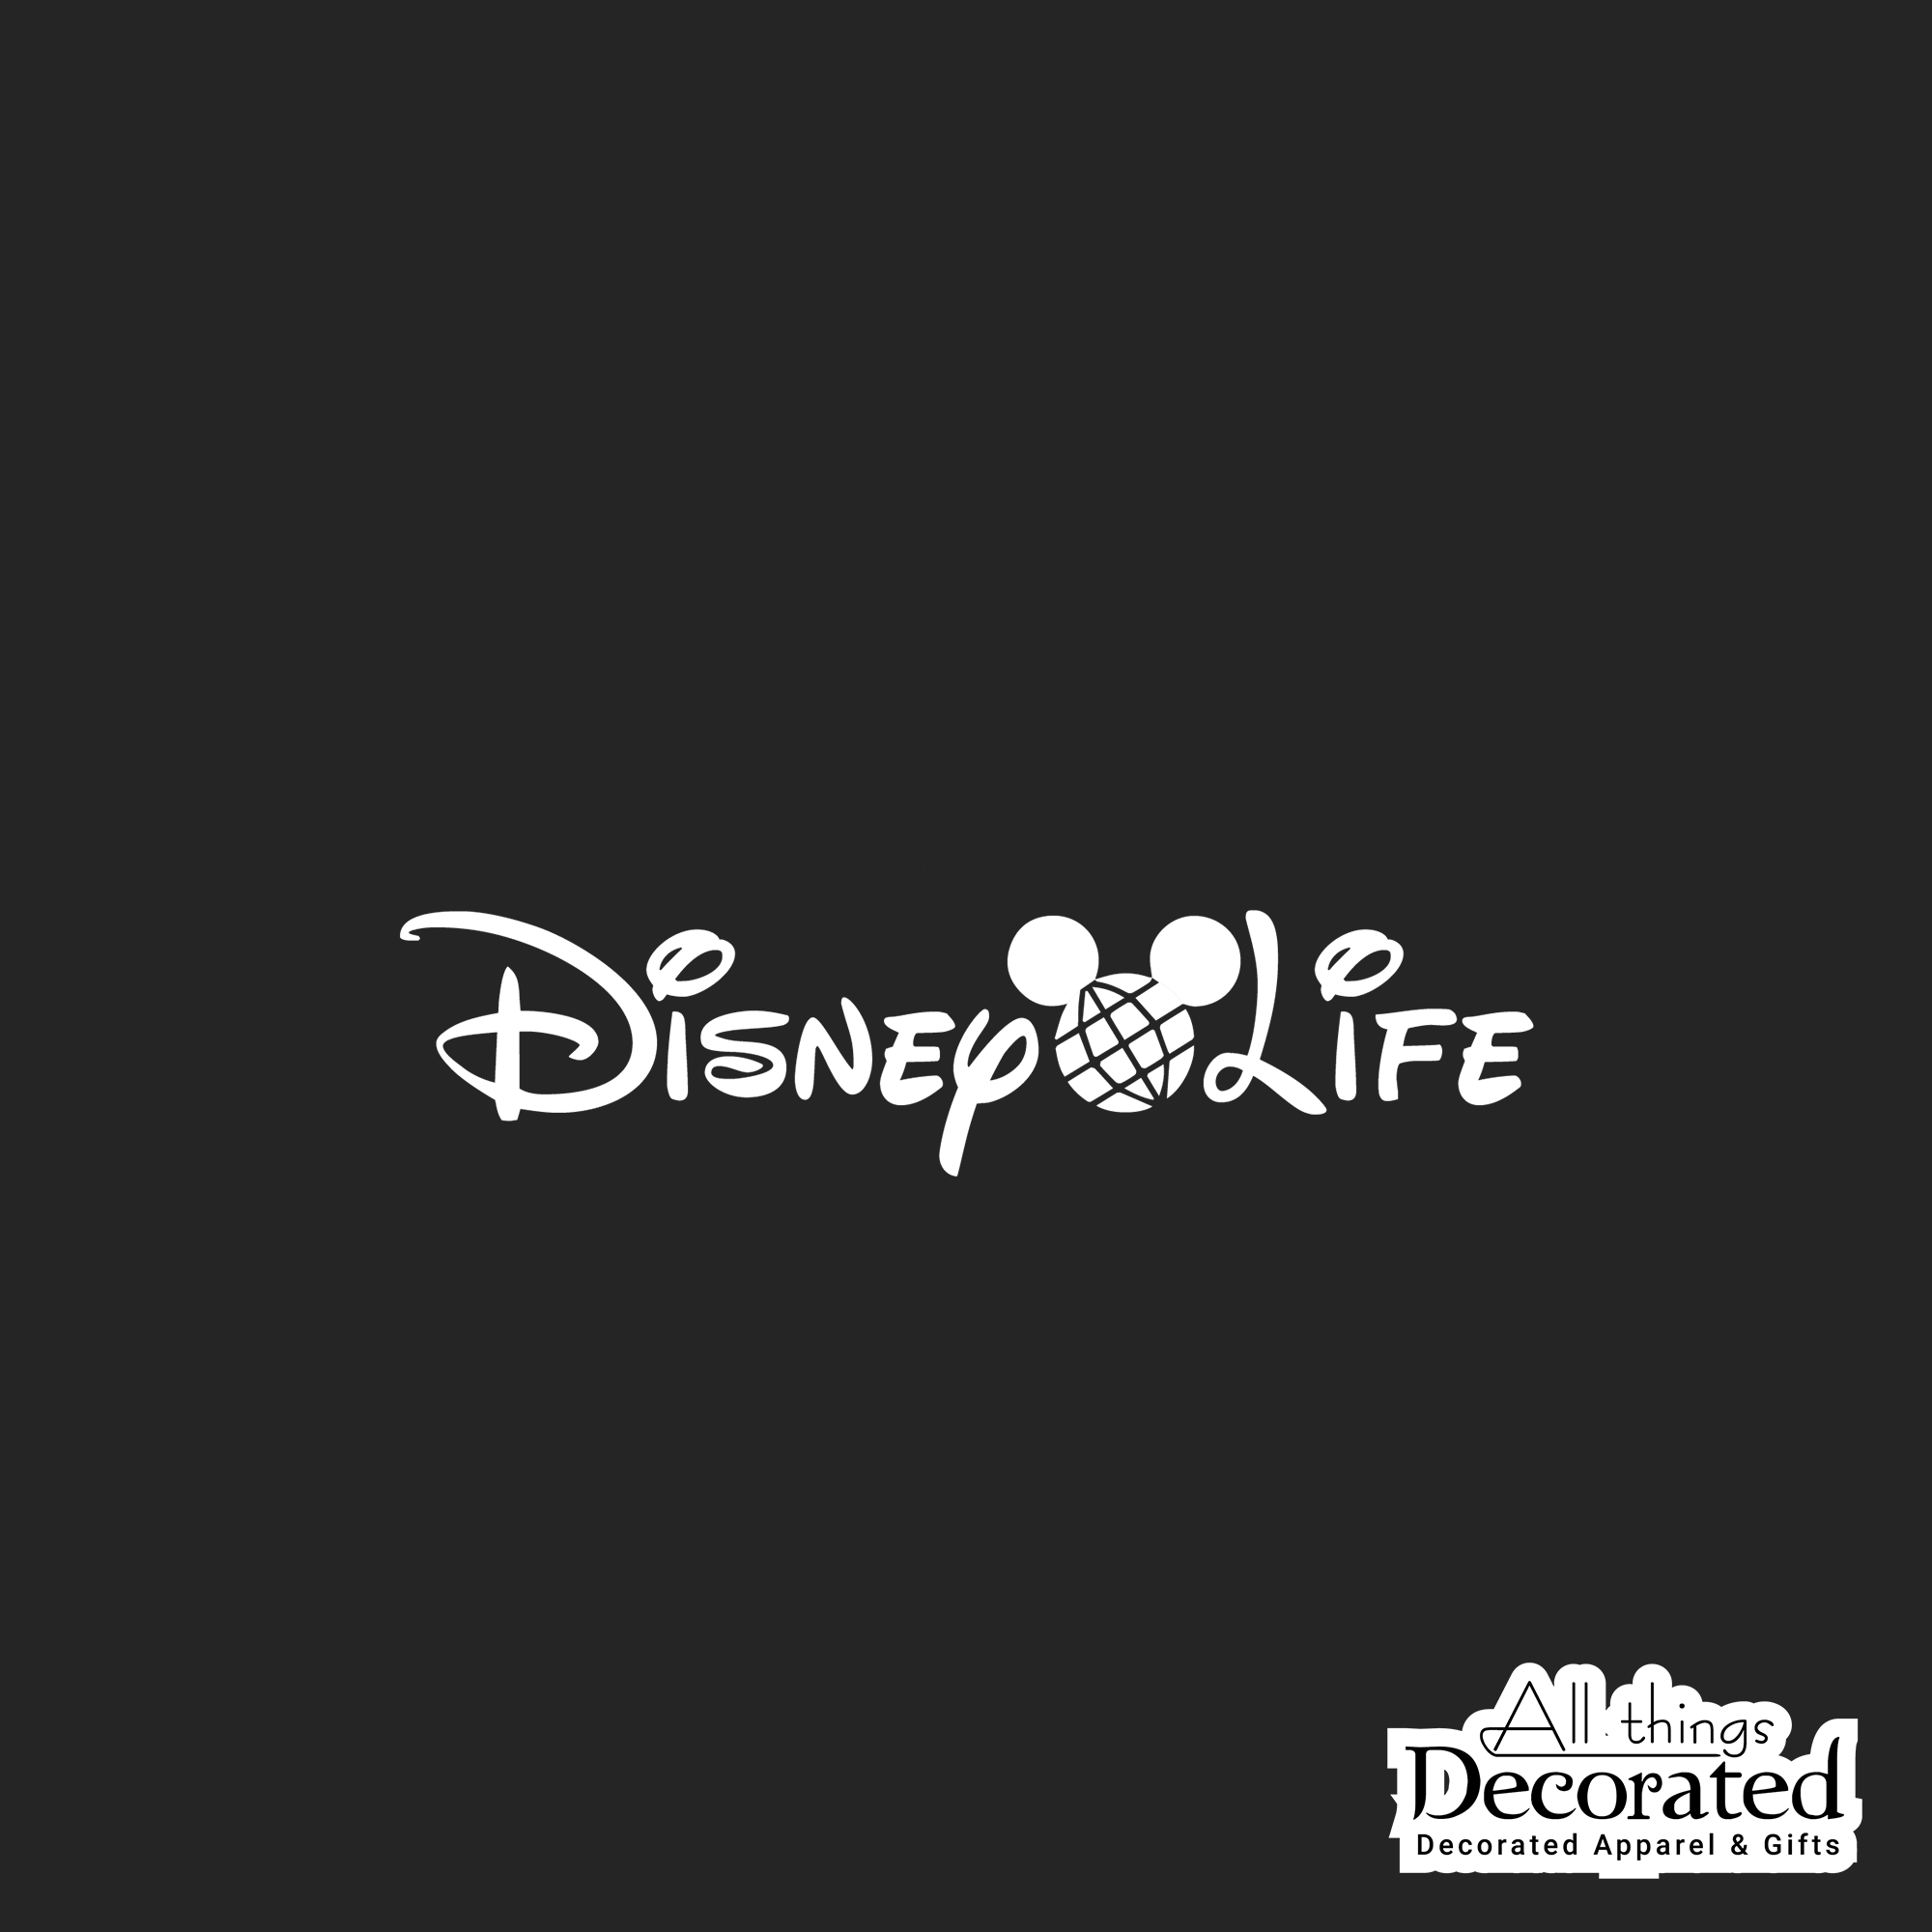 Disney Life Free shipping Vinyl car decal